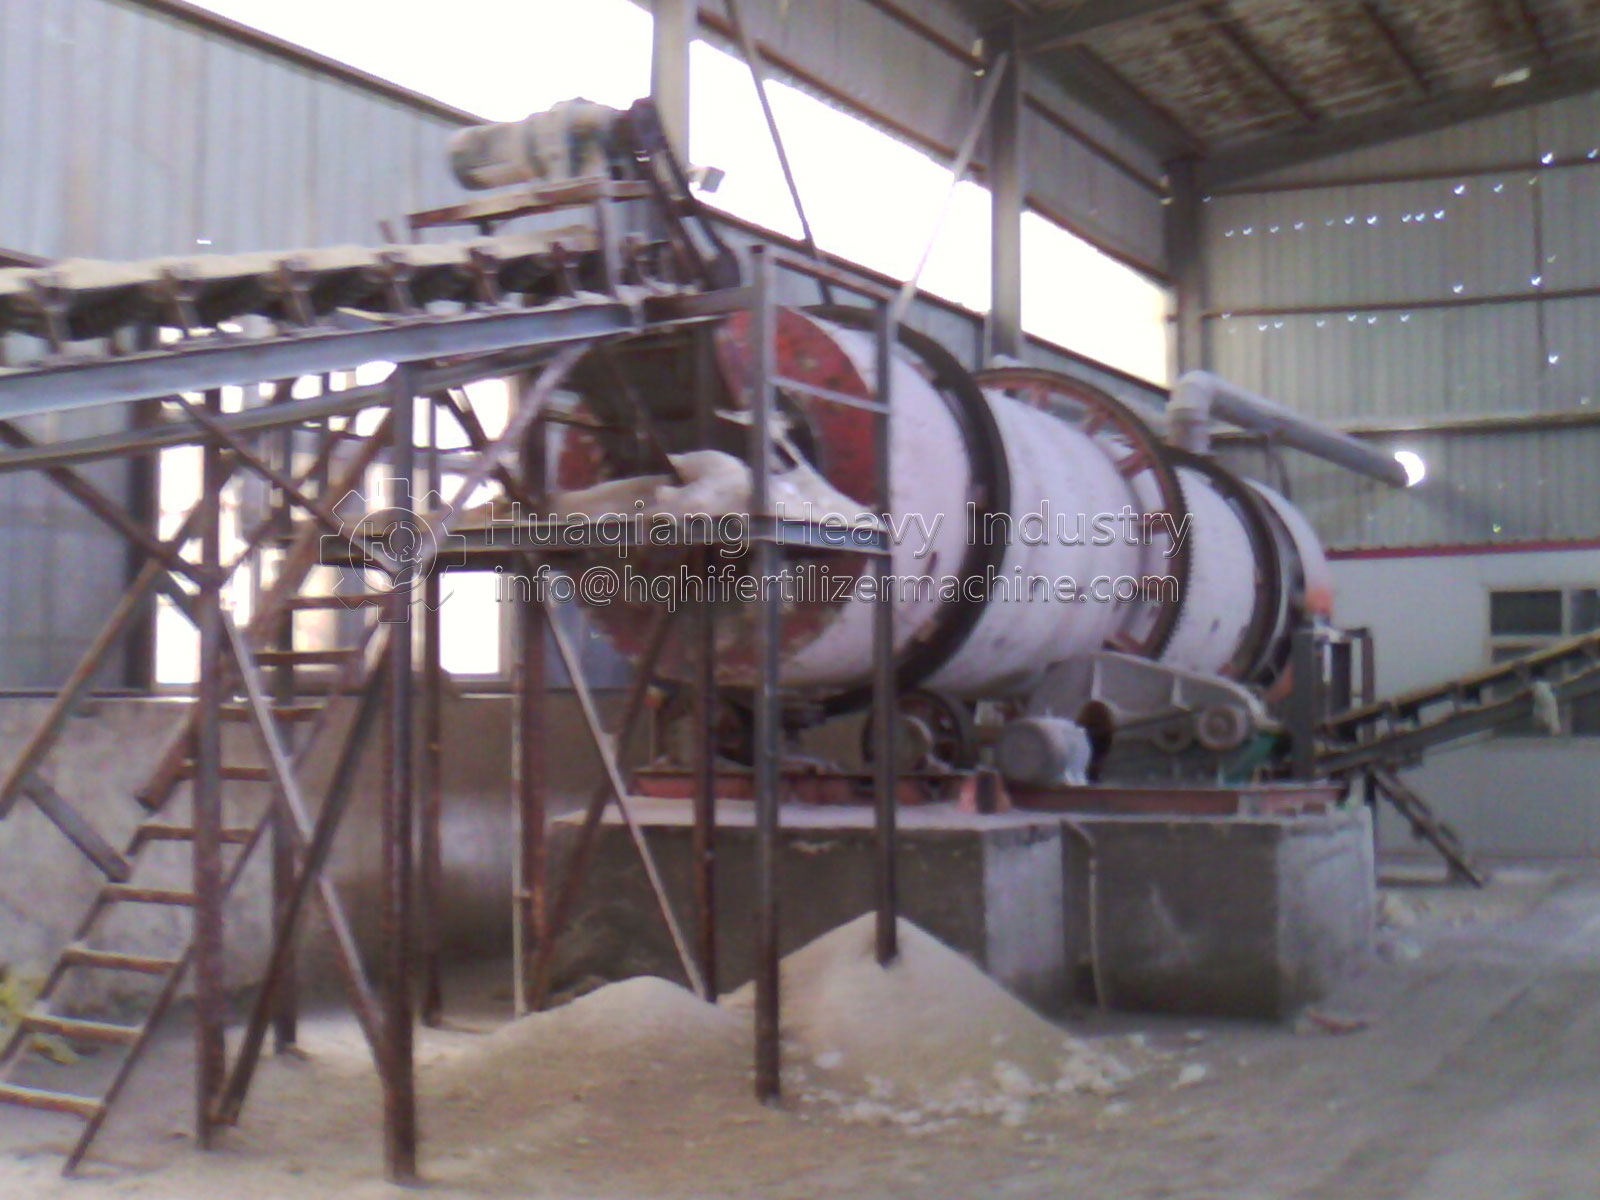 NPK compound fertilizer equipment sent to Malaysia